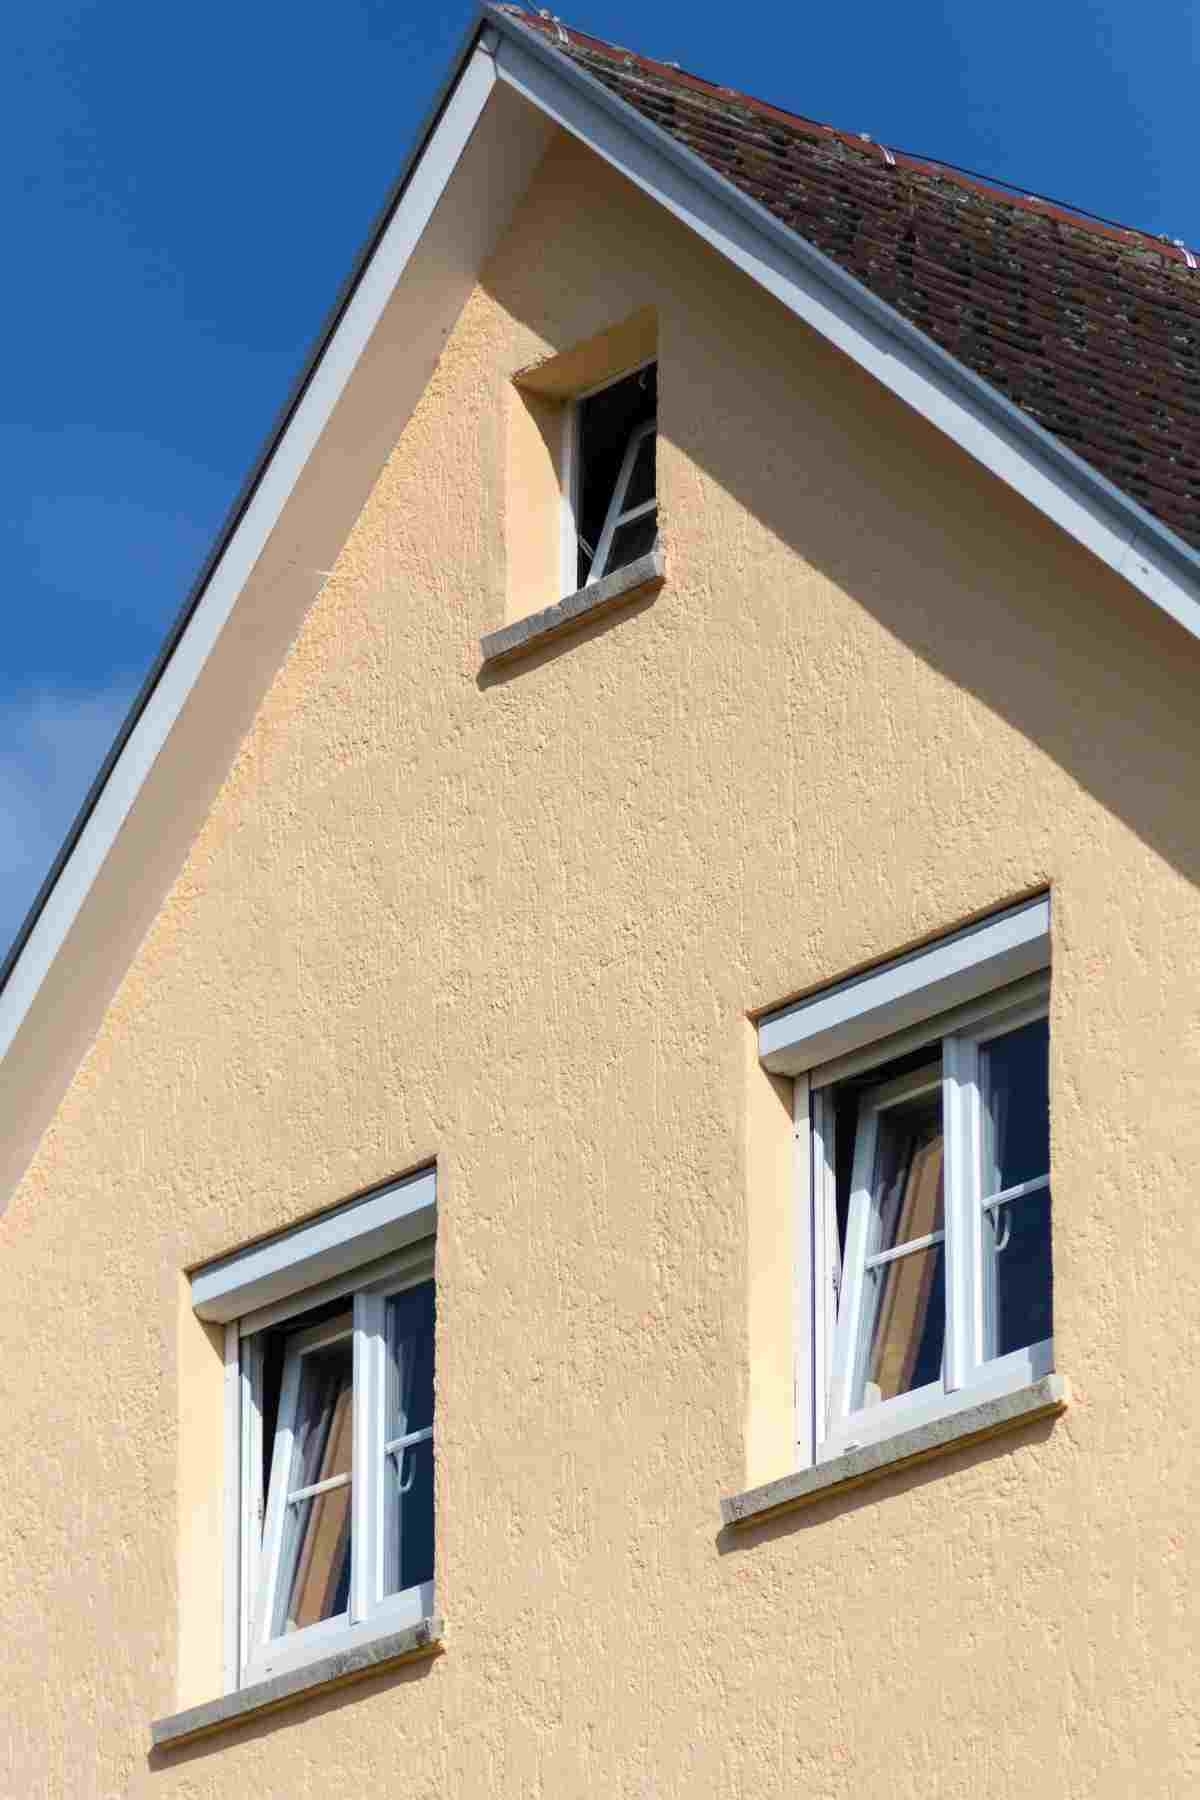 image of house with stucco siding